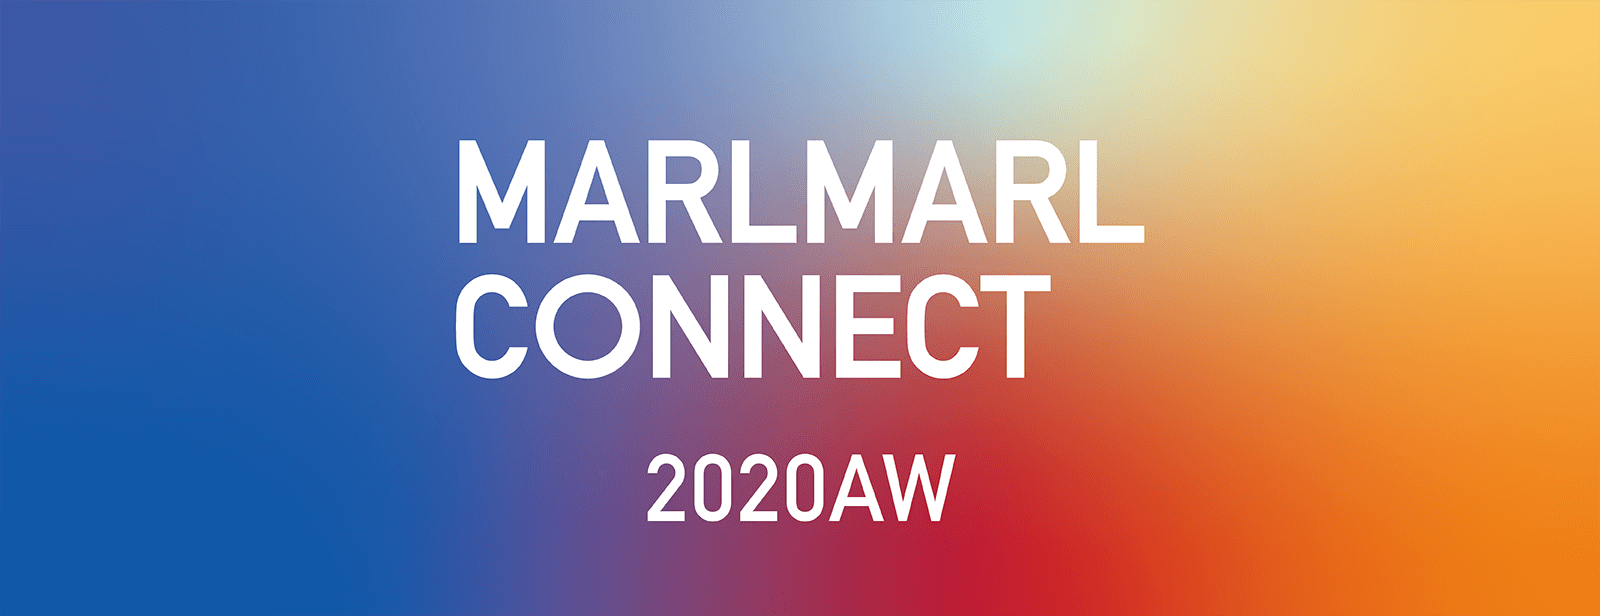 MARLMARL CONNECT 2020